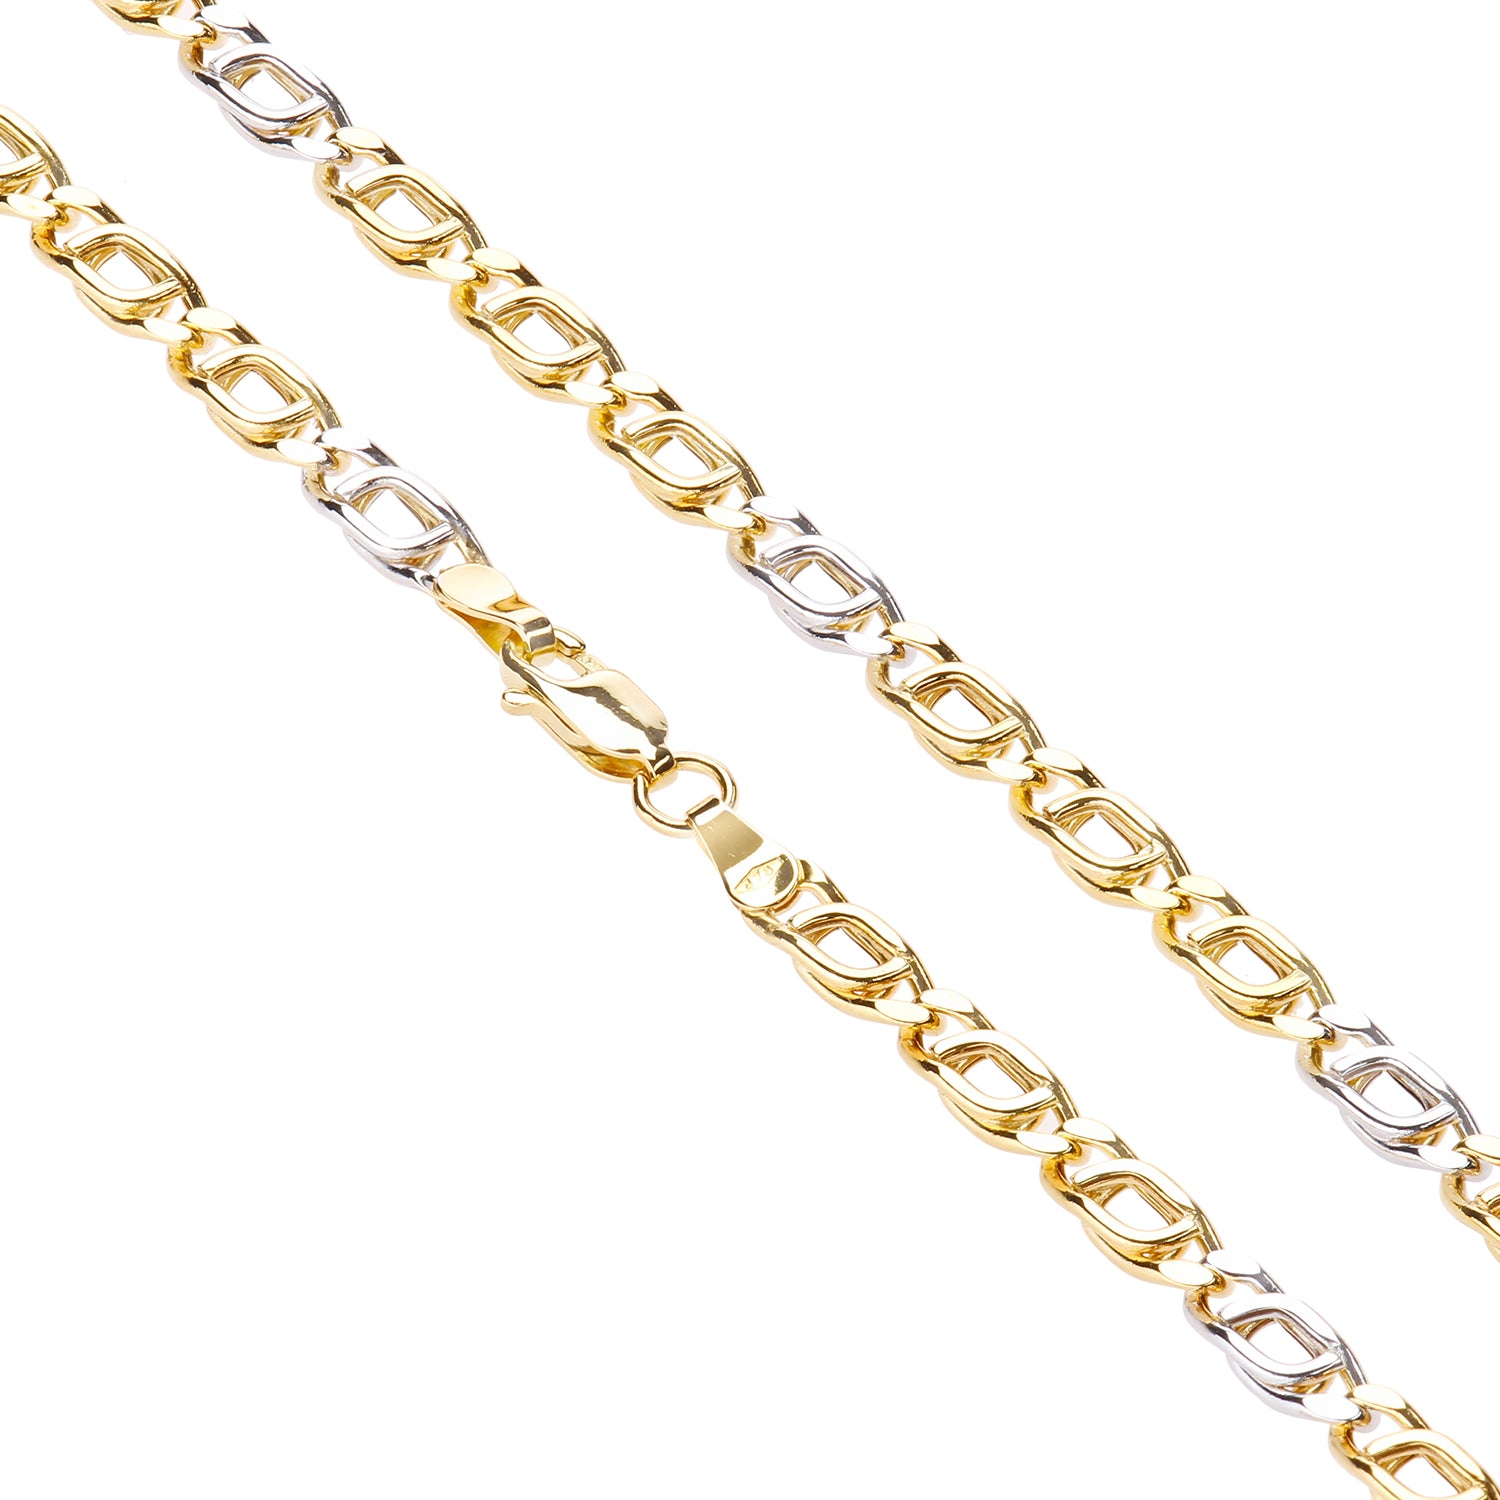 9ct White & Yellow Gold  Birds eye Chain Necklace 18 inch - NK1AXL804YW